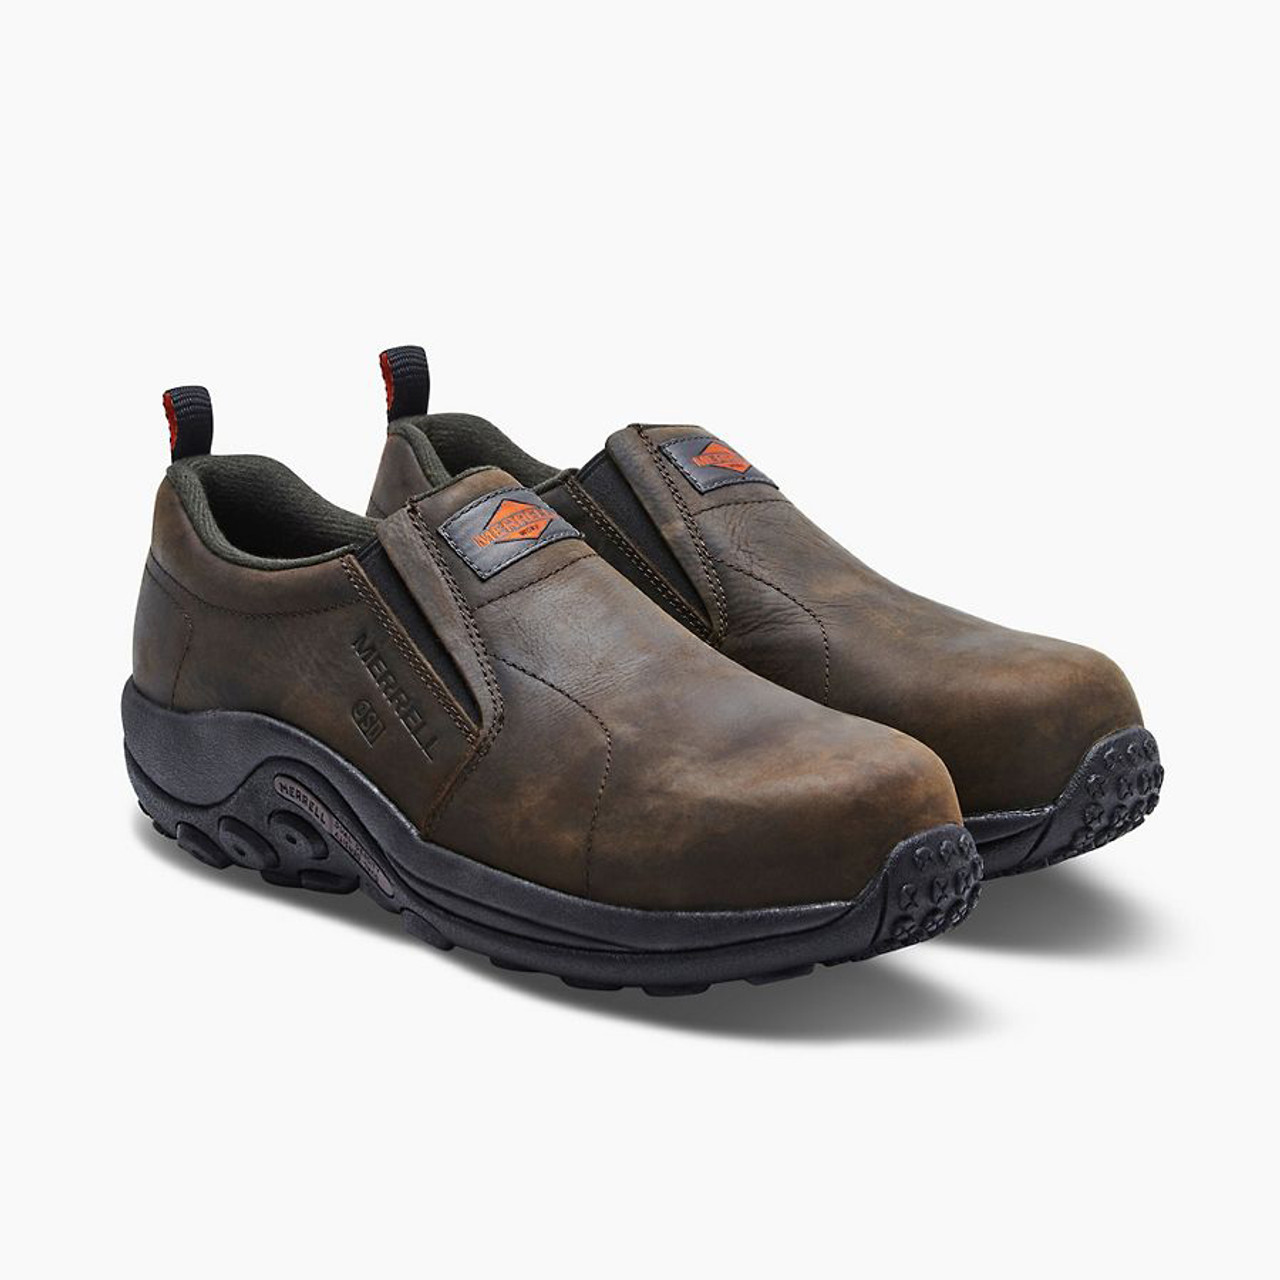 Merrell Jungle #J099381 Composite Safety Toe Slip Work Shoe